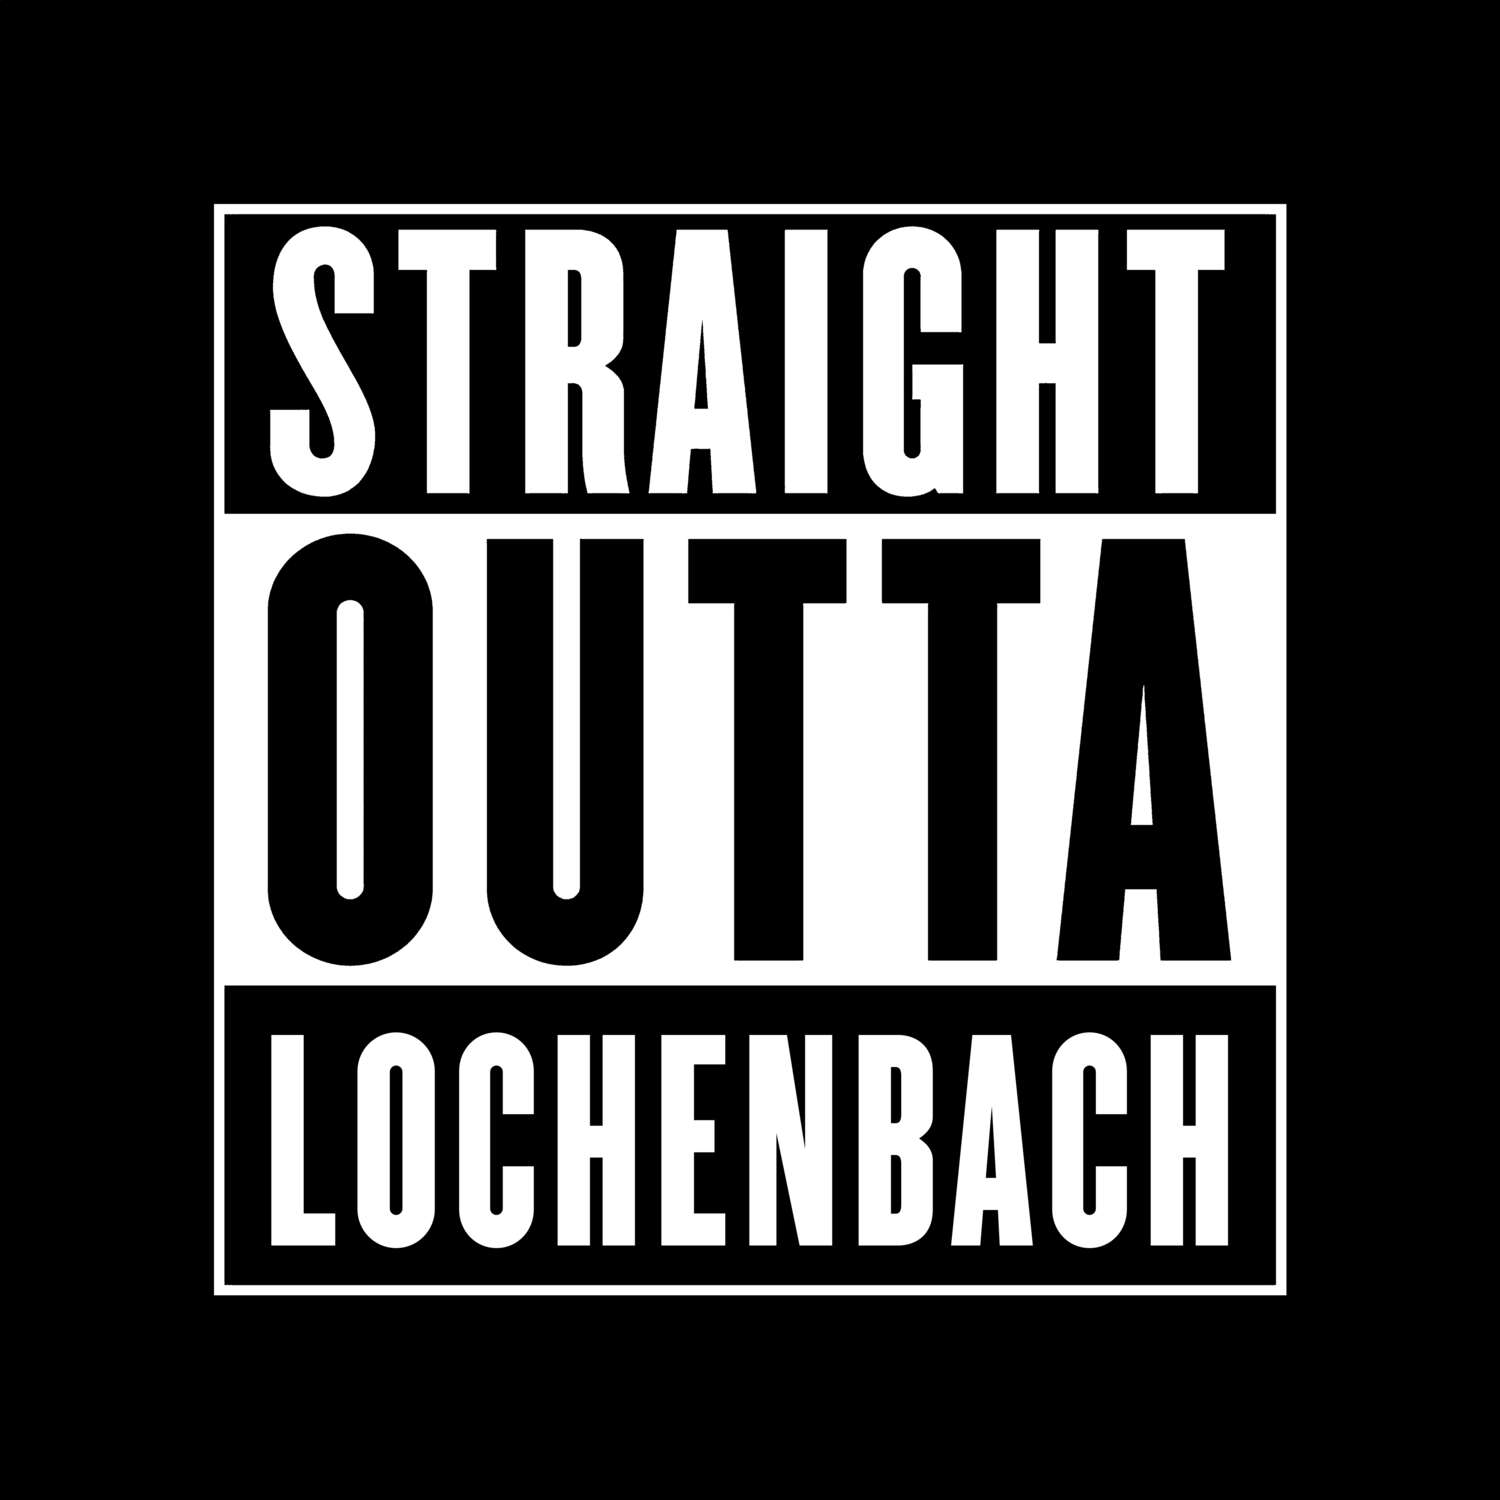 Lochenbach T-Shirt »Straight Outta«